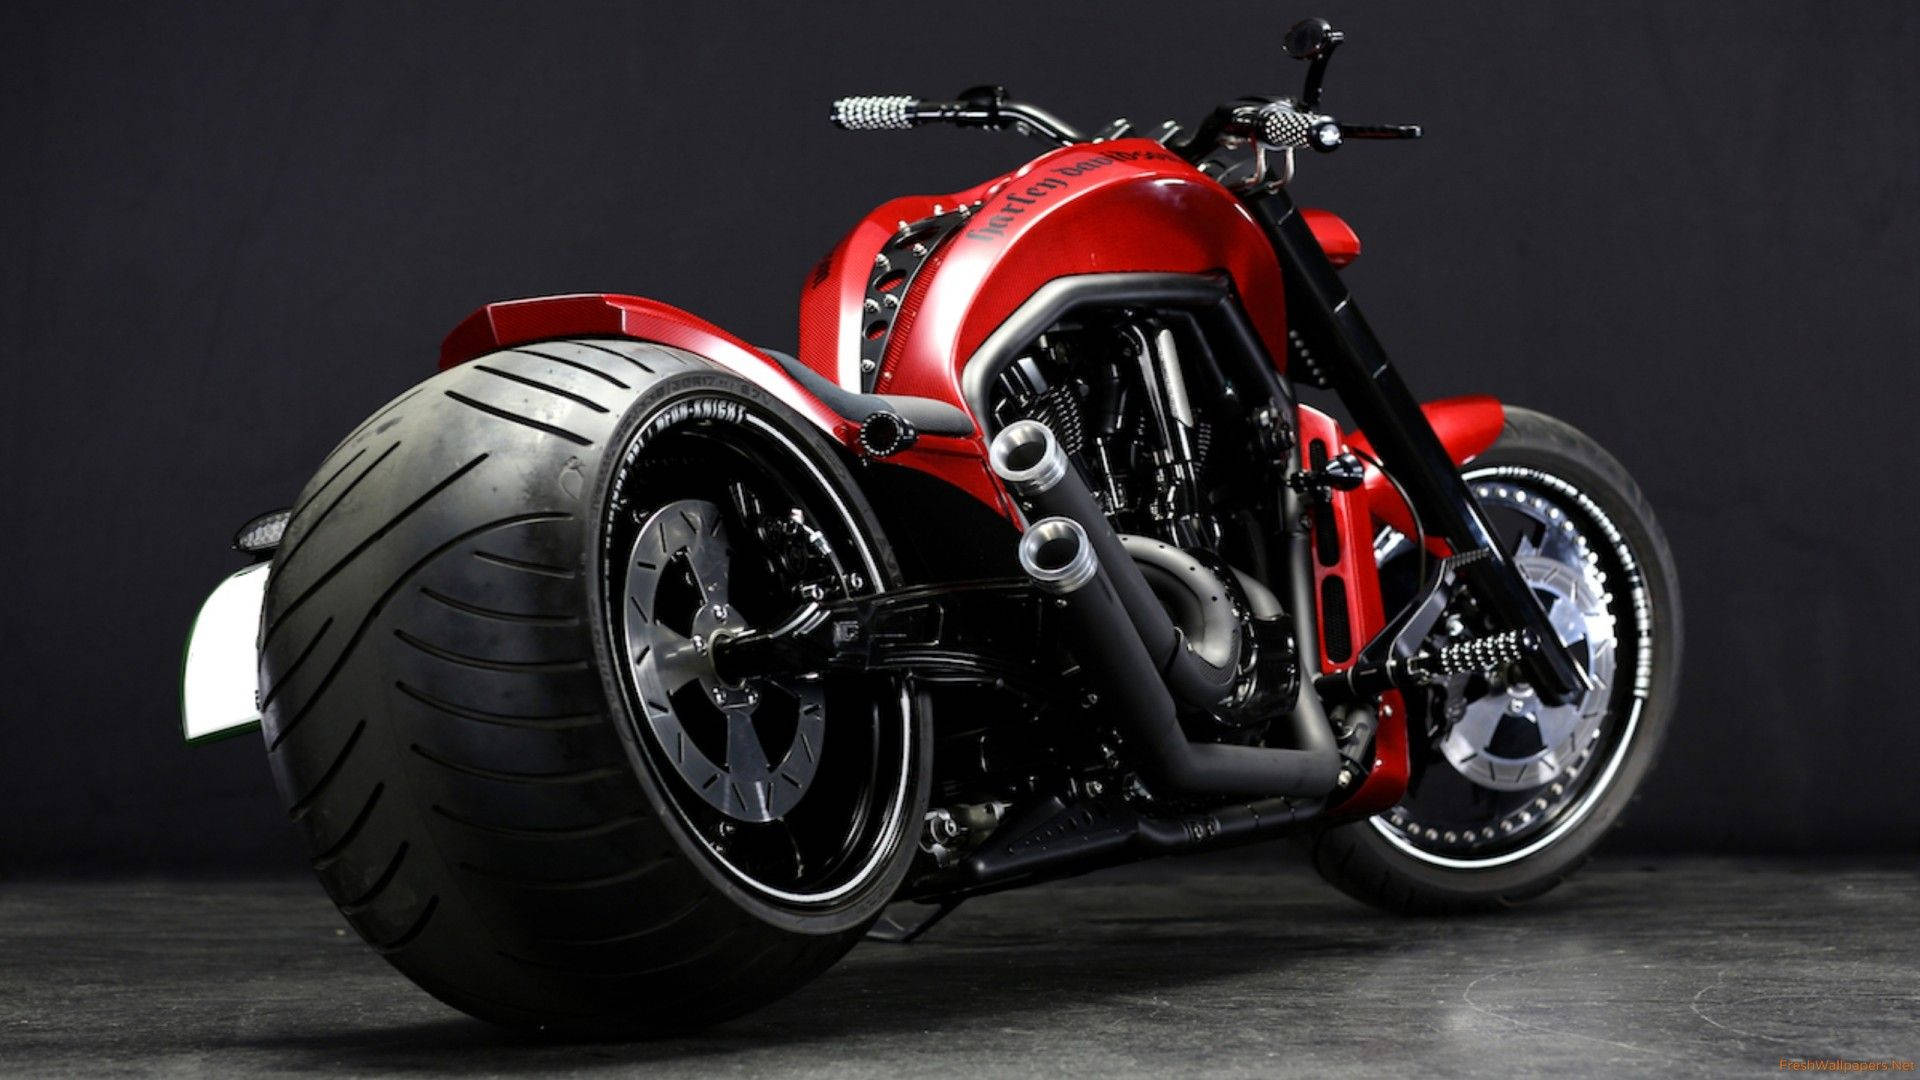 Red Harley Davidson V-rod Wallpaper